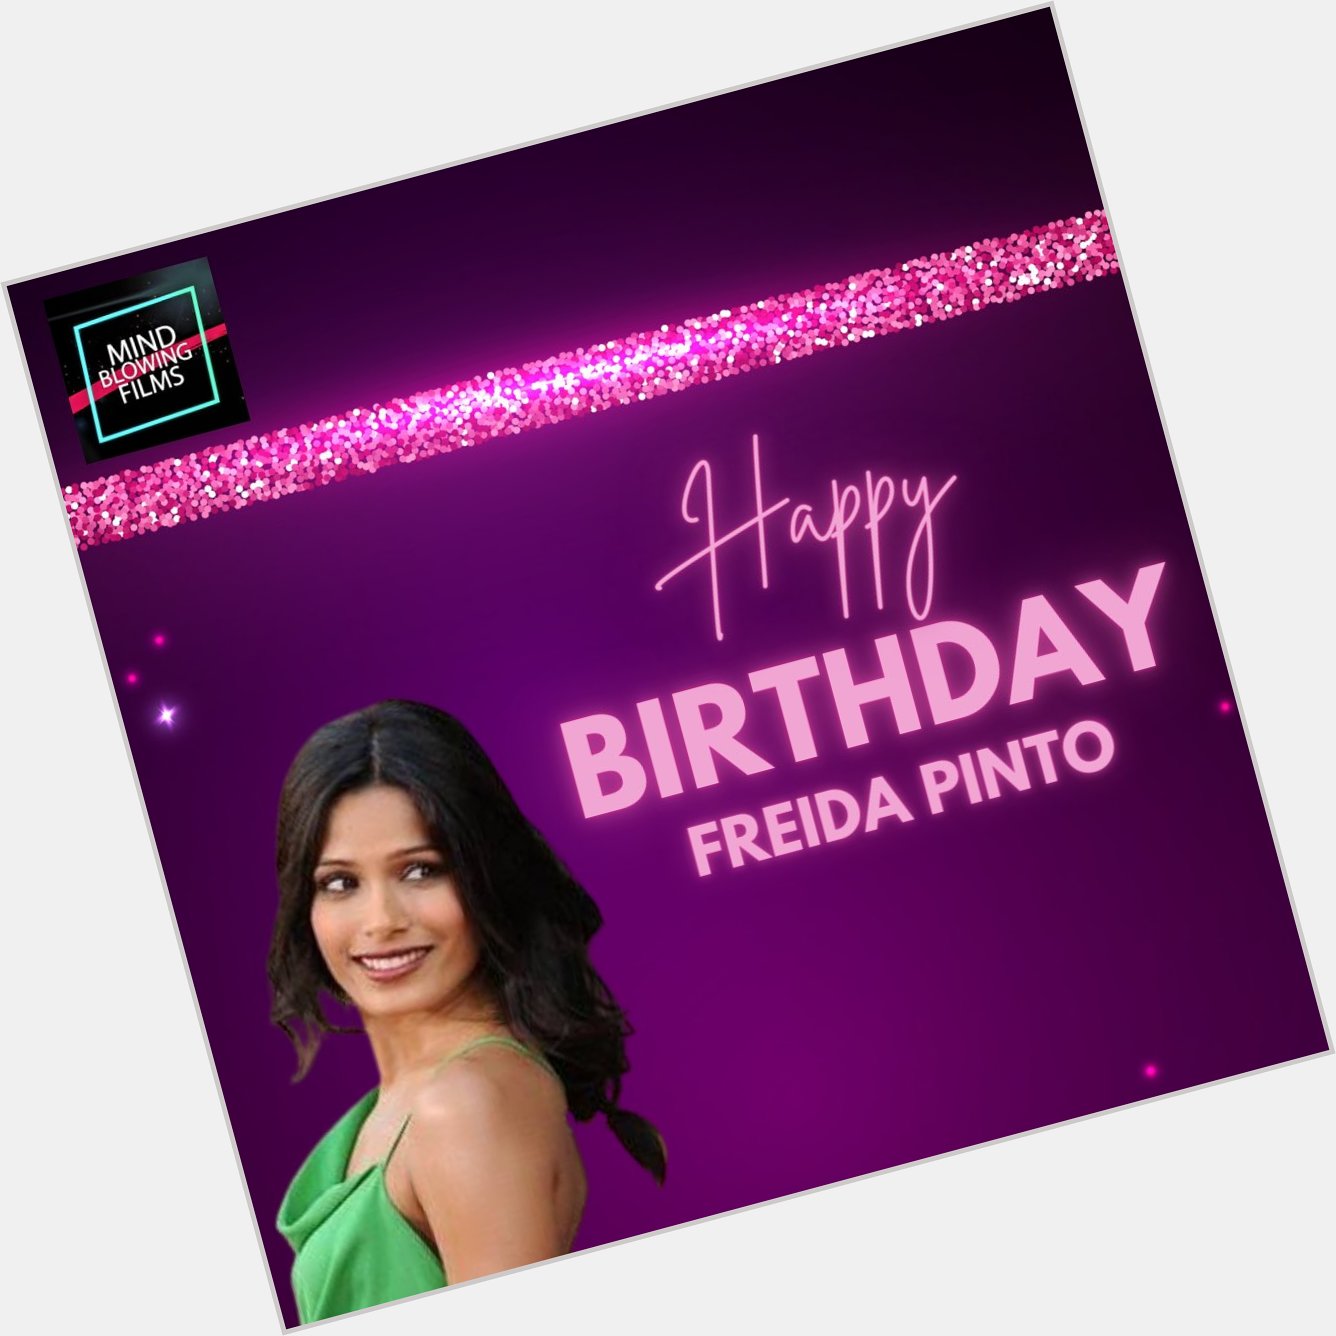 Happy Birthday Freida Pinto  